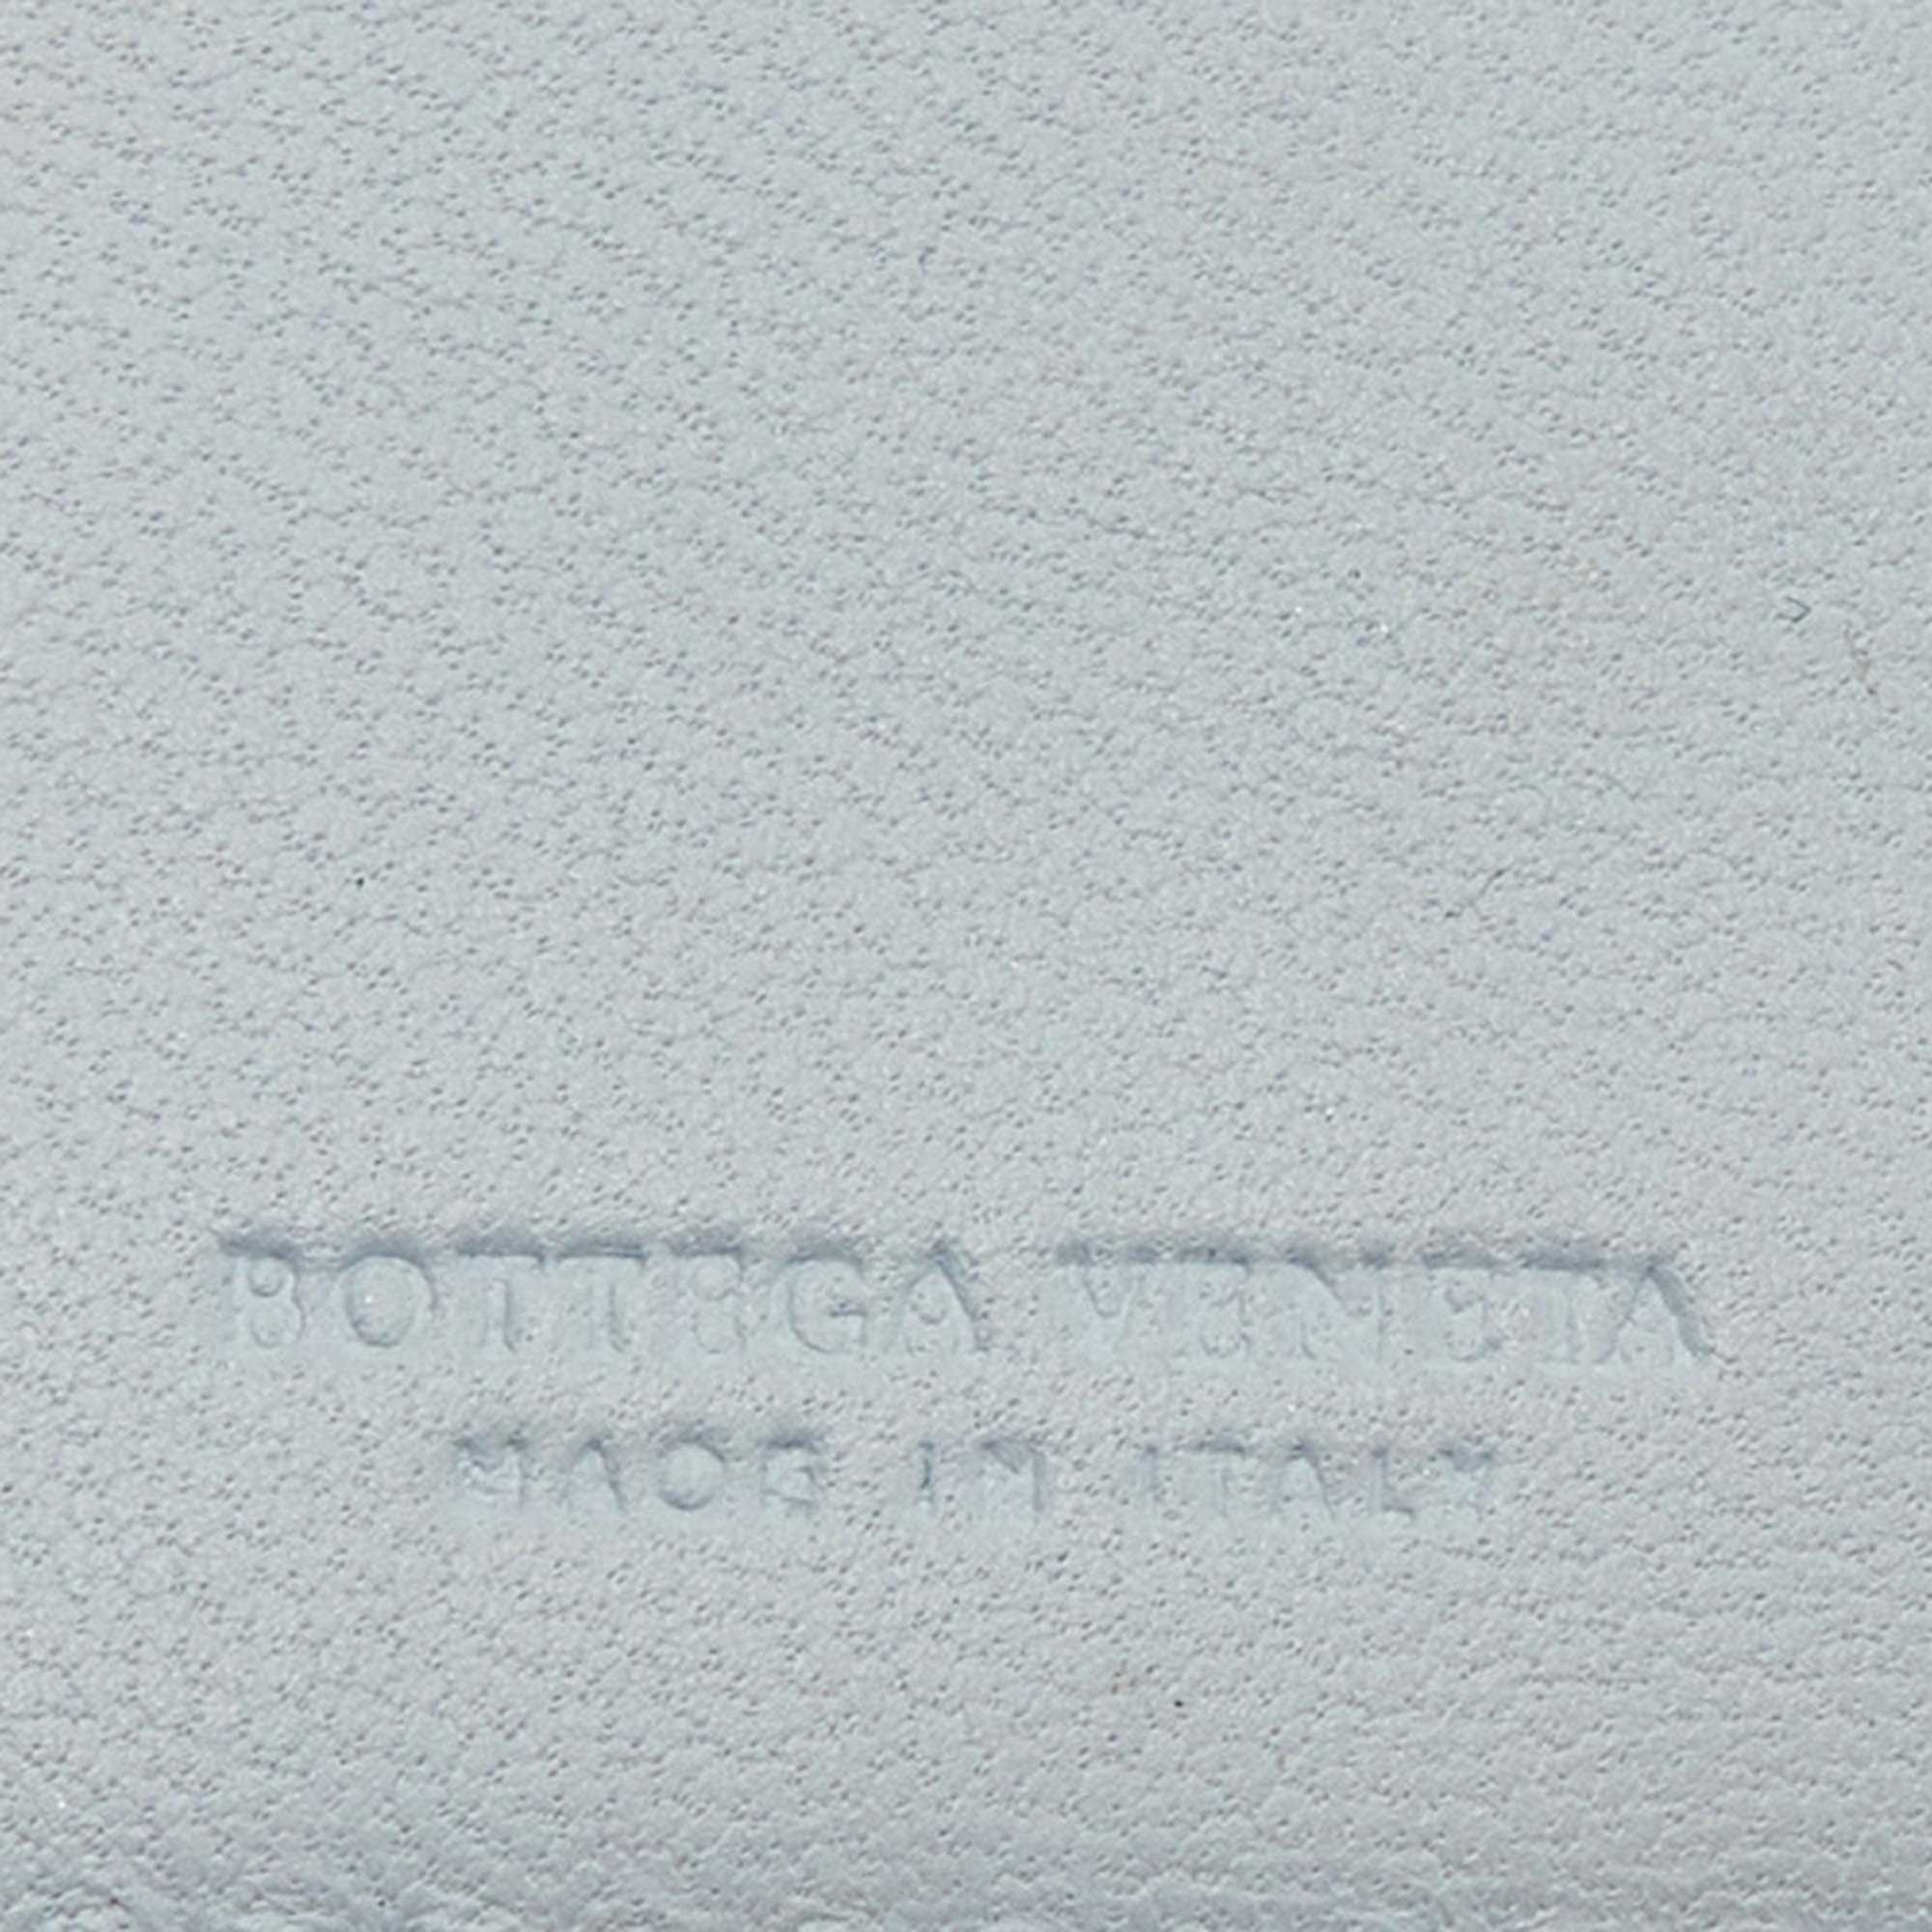 Bottega Veneta Blue Intrecciato Leather Butterfly French Wallet